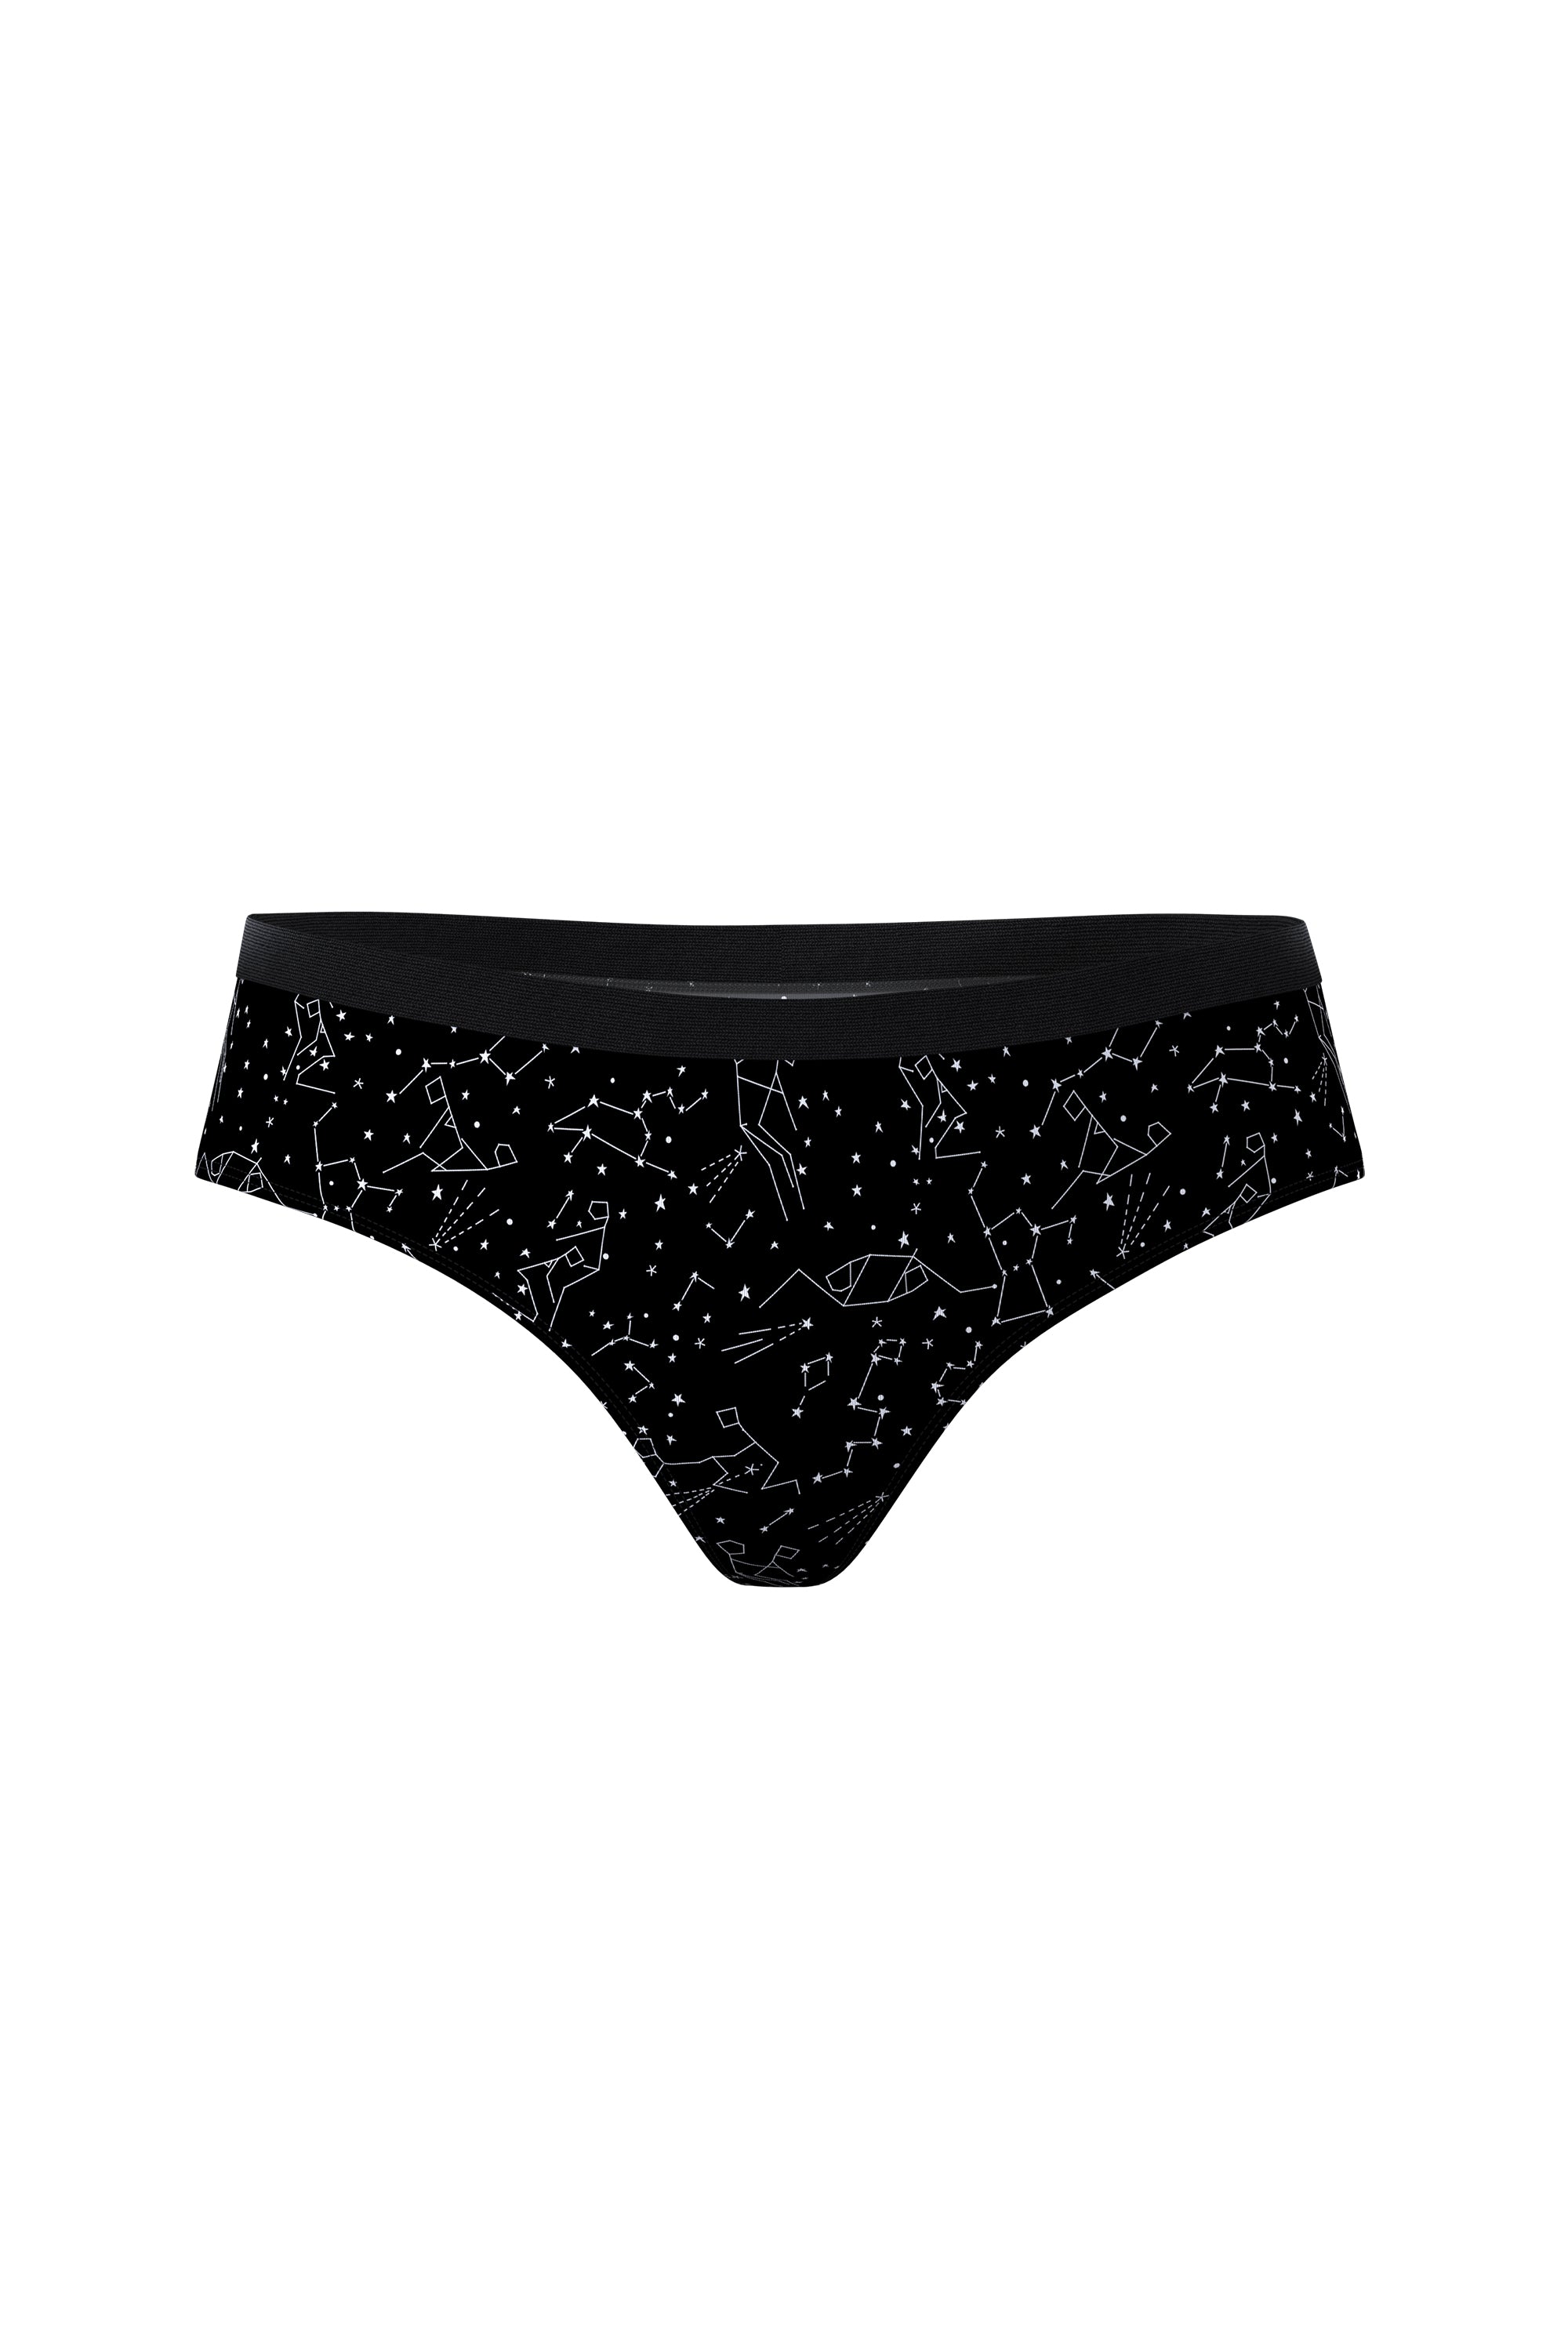 Mistletoe Ball Hammock & Bikini Matching Underwear